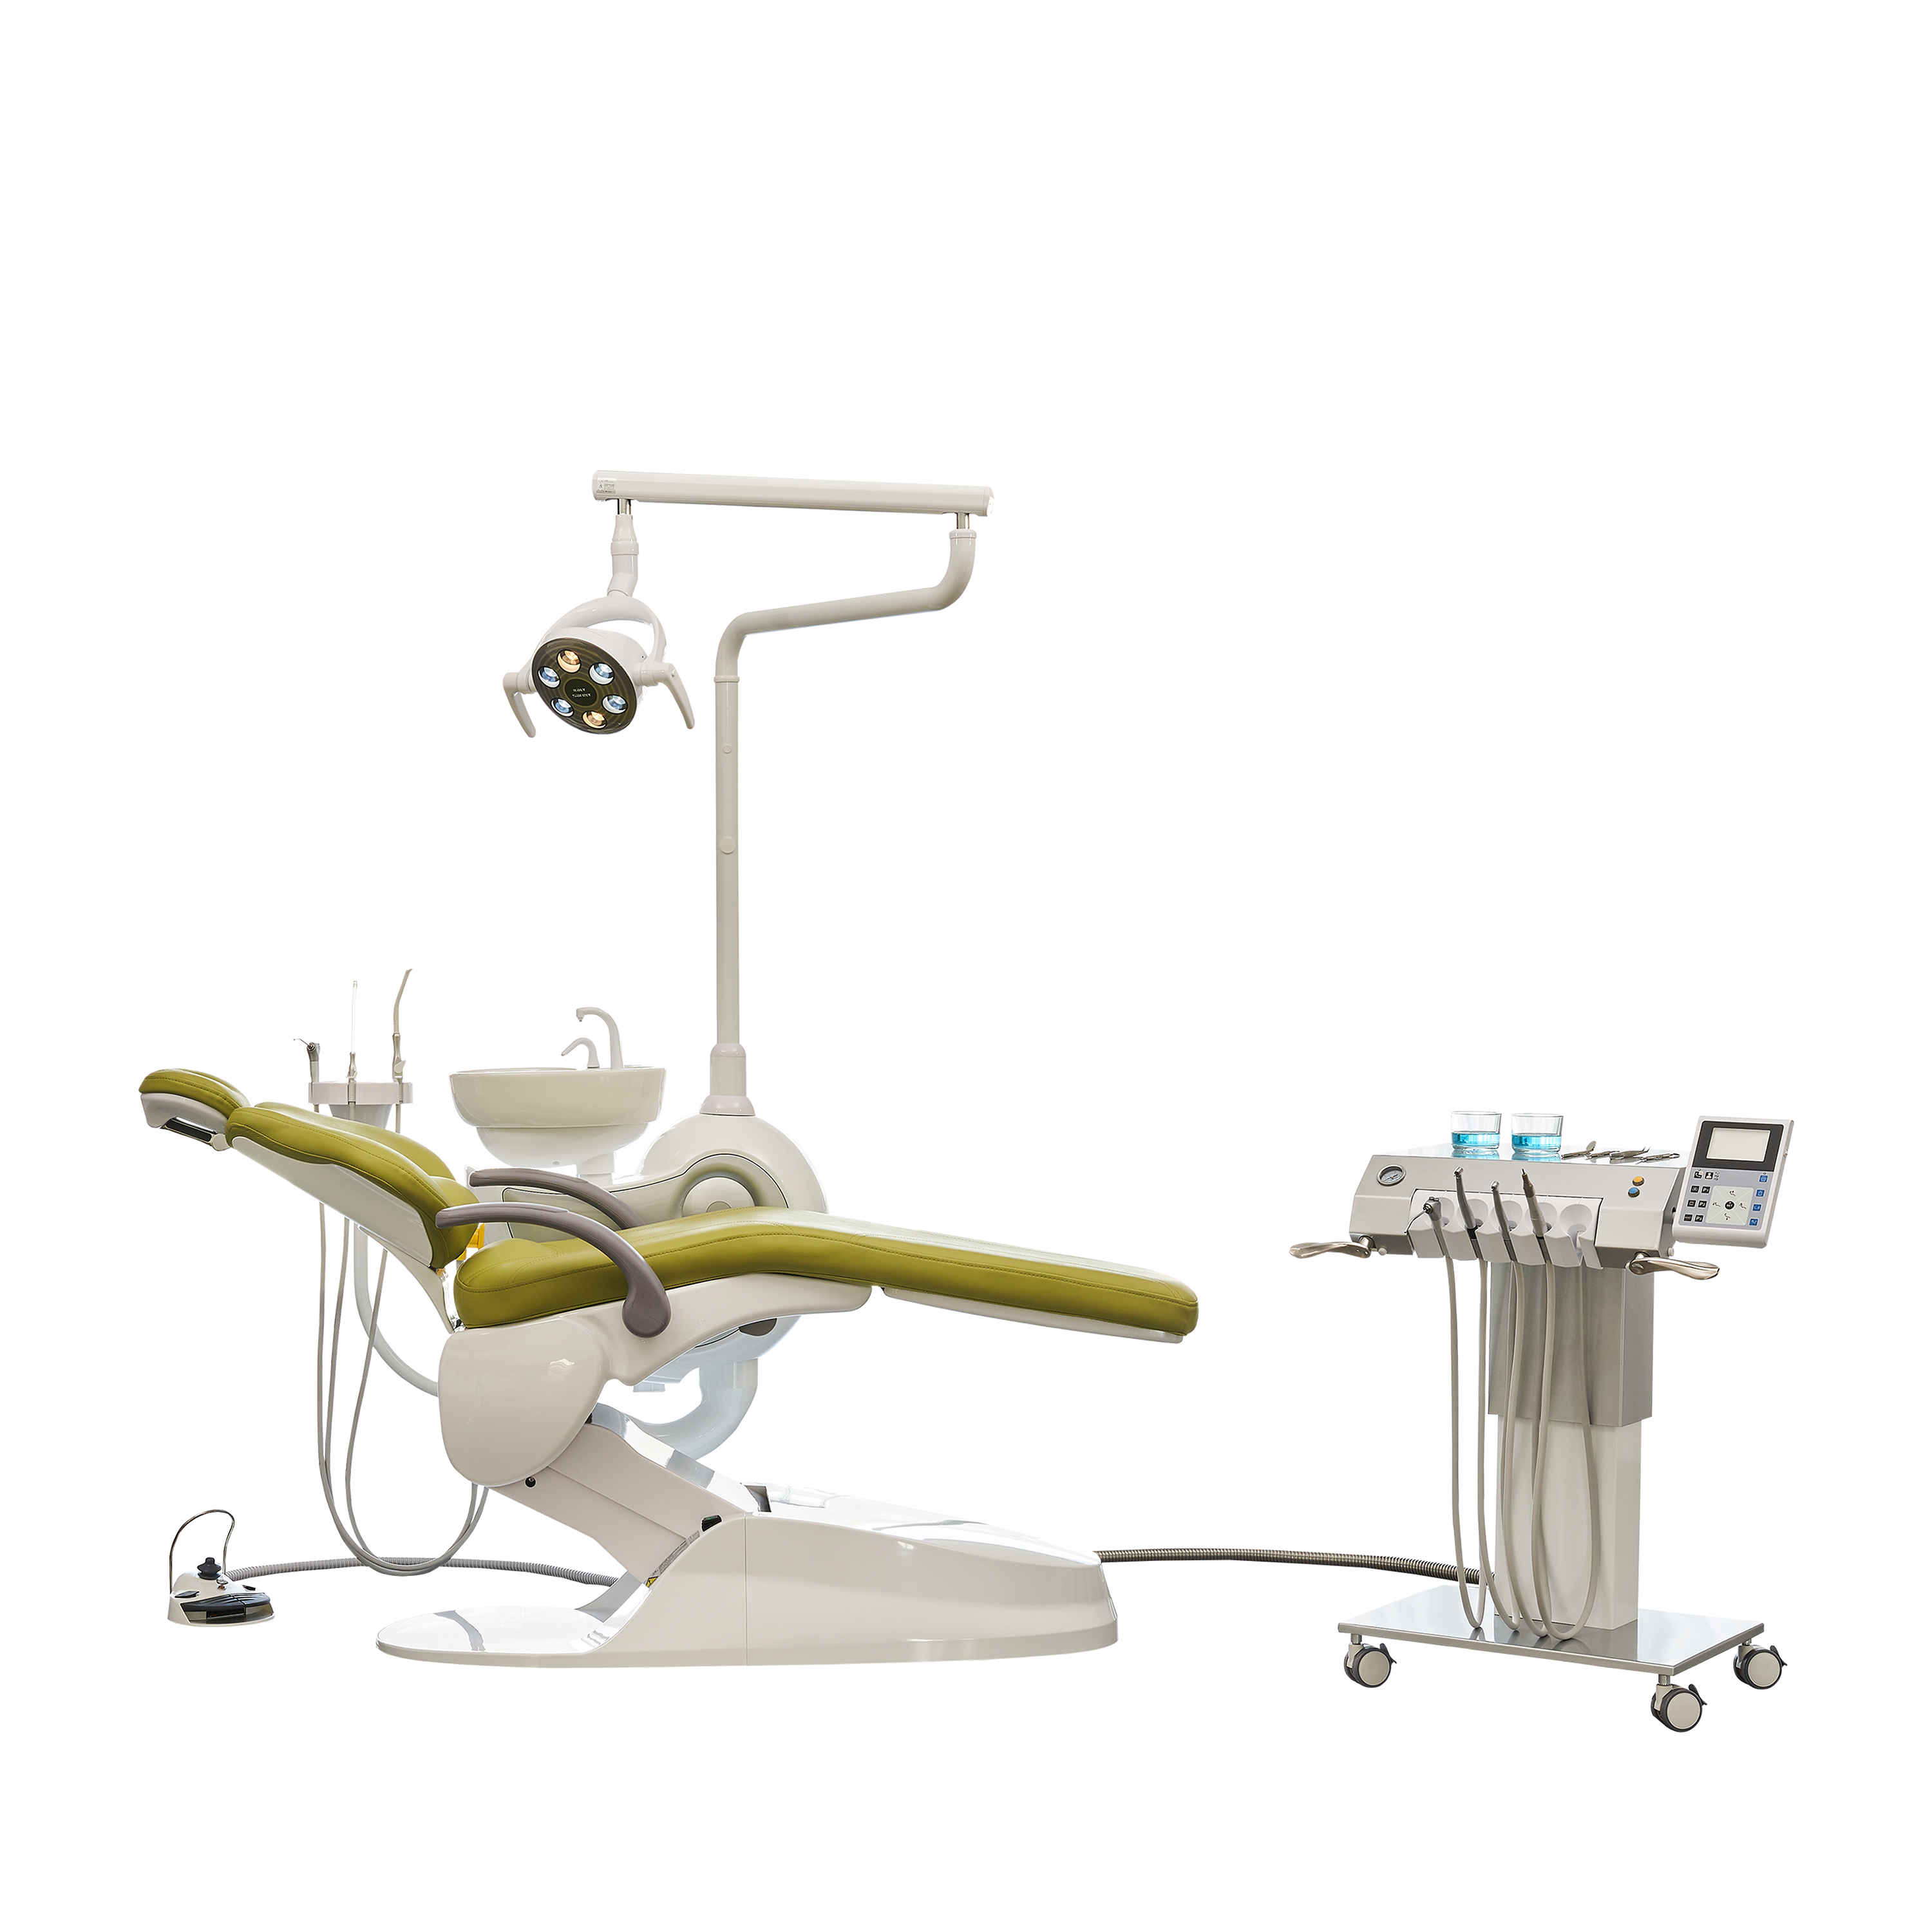 Green Dental Chairs For Better Ergonomics & Ecology